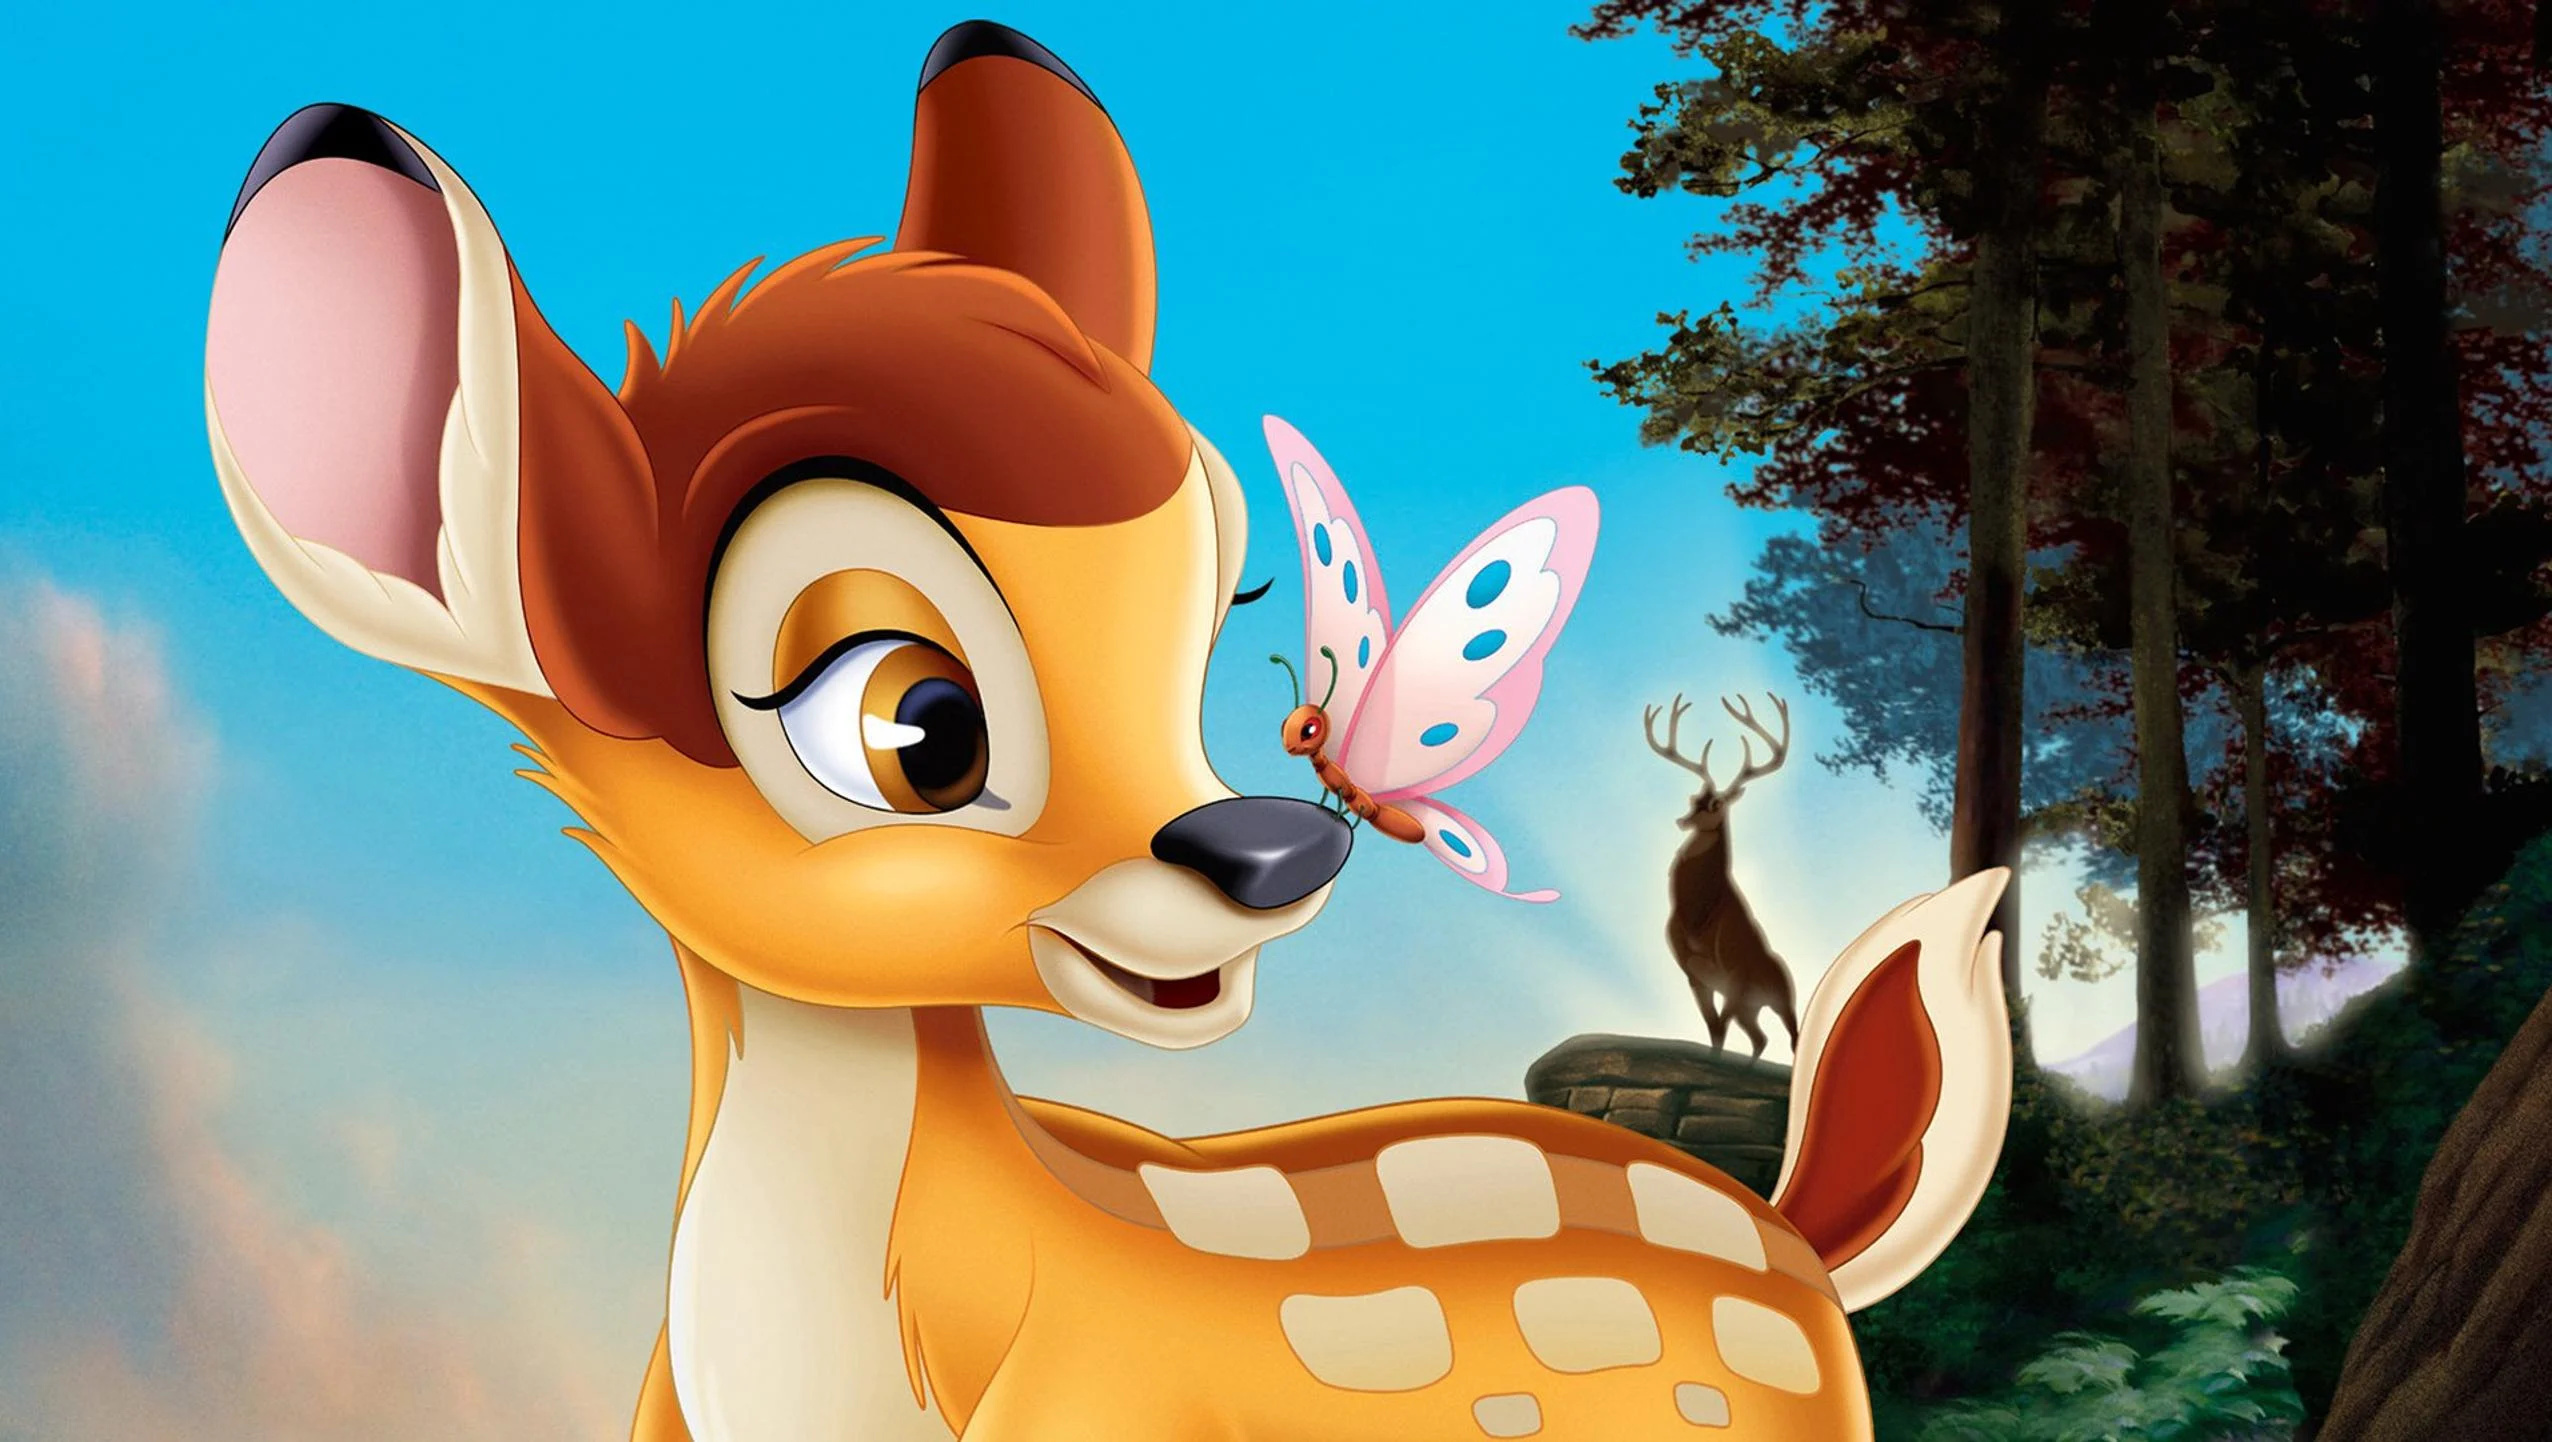 Bambi backgrounds, Gorgeous nature, Forest wonders, Enchanting scenes, 2560x1450 HD Desktop